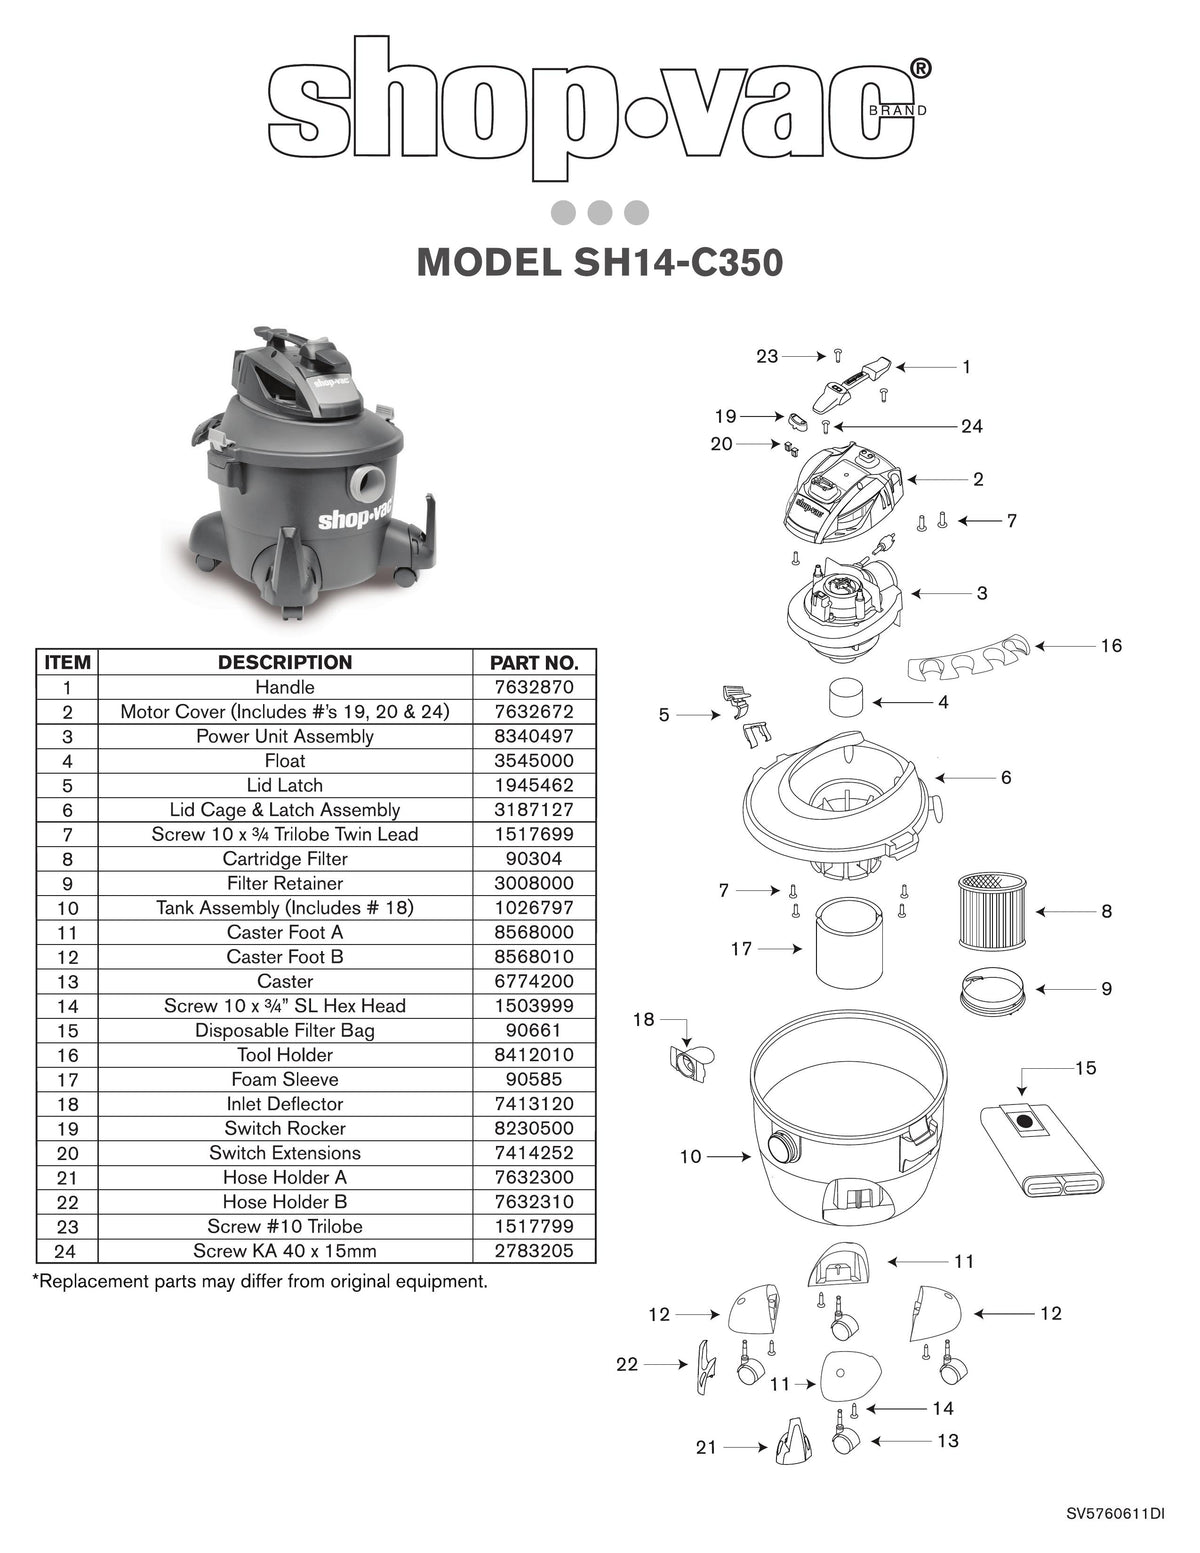 Shop-Vac Parts List for 92P600CM Models (Shop-Vac 16 Gallon* 6.0 Peak